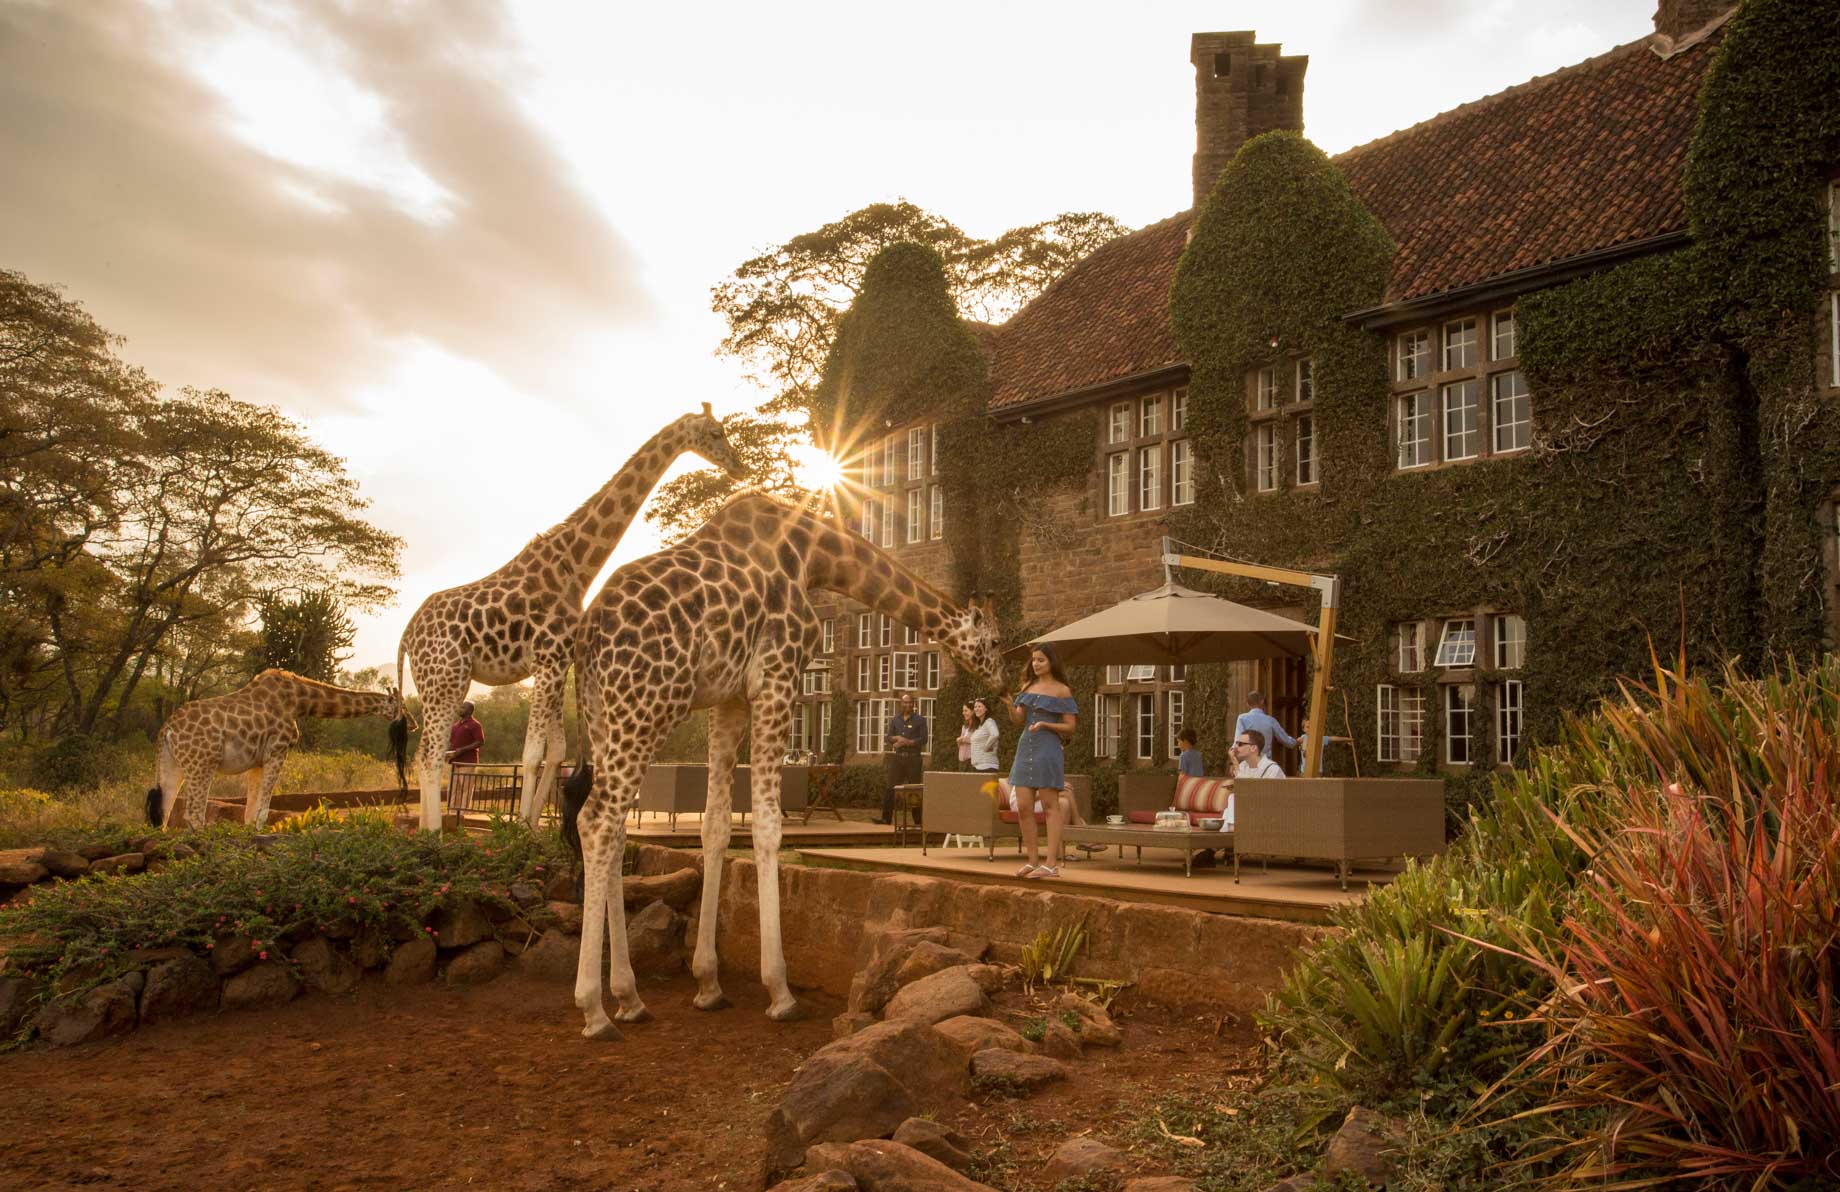 Hand feeding giraffes at the Nairobi